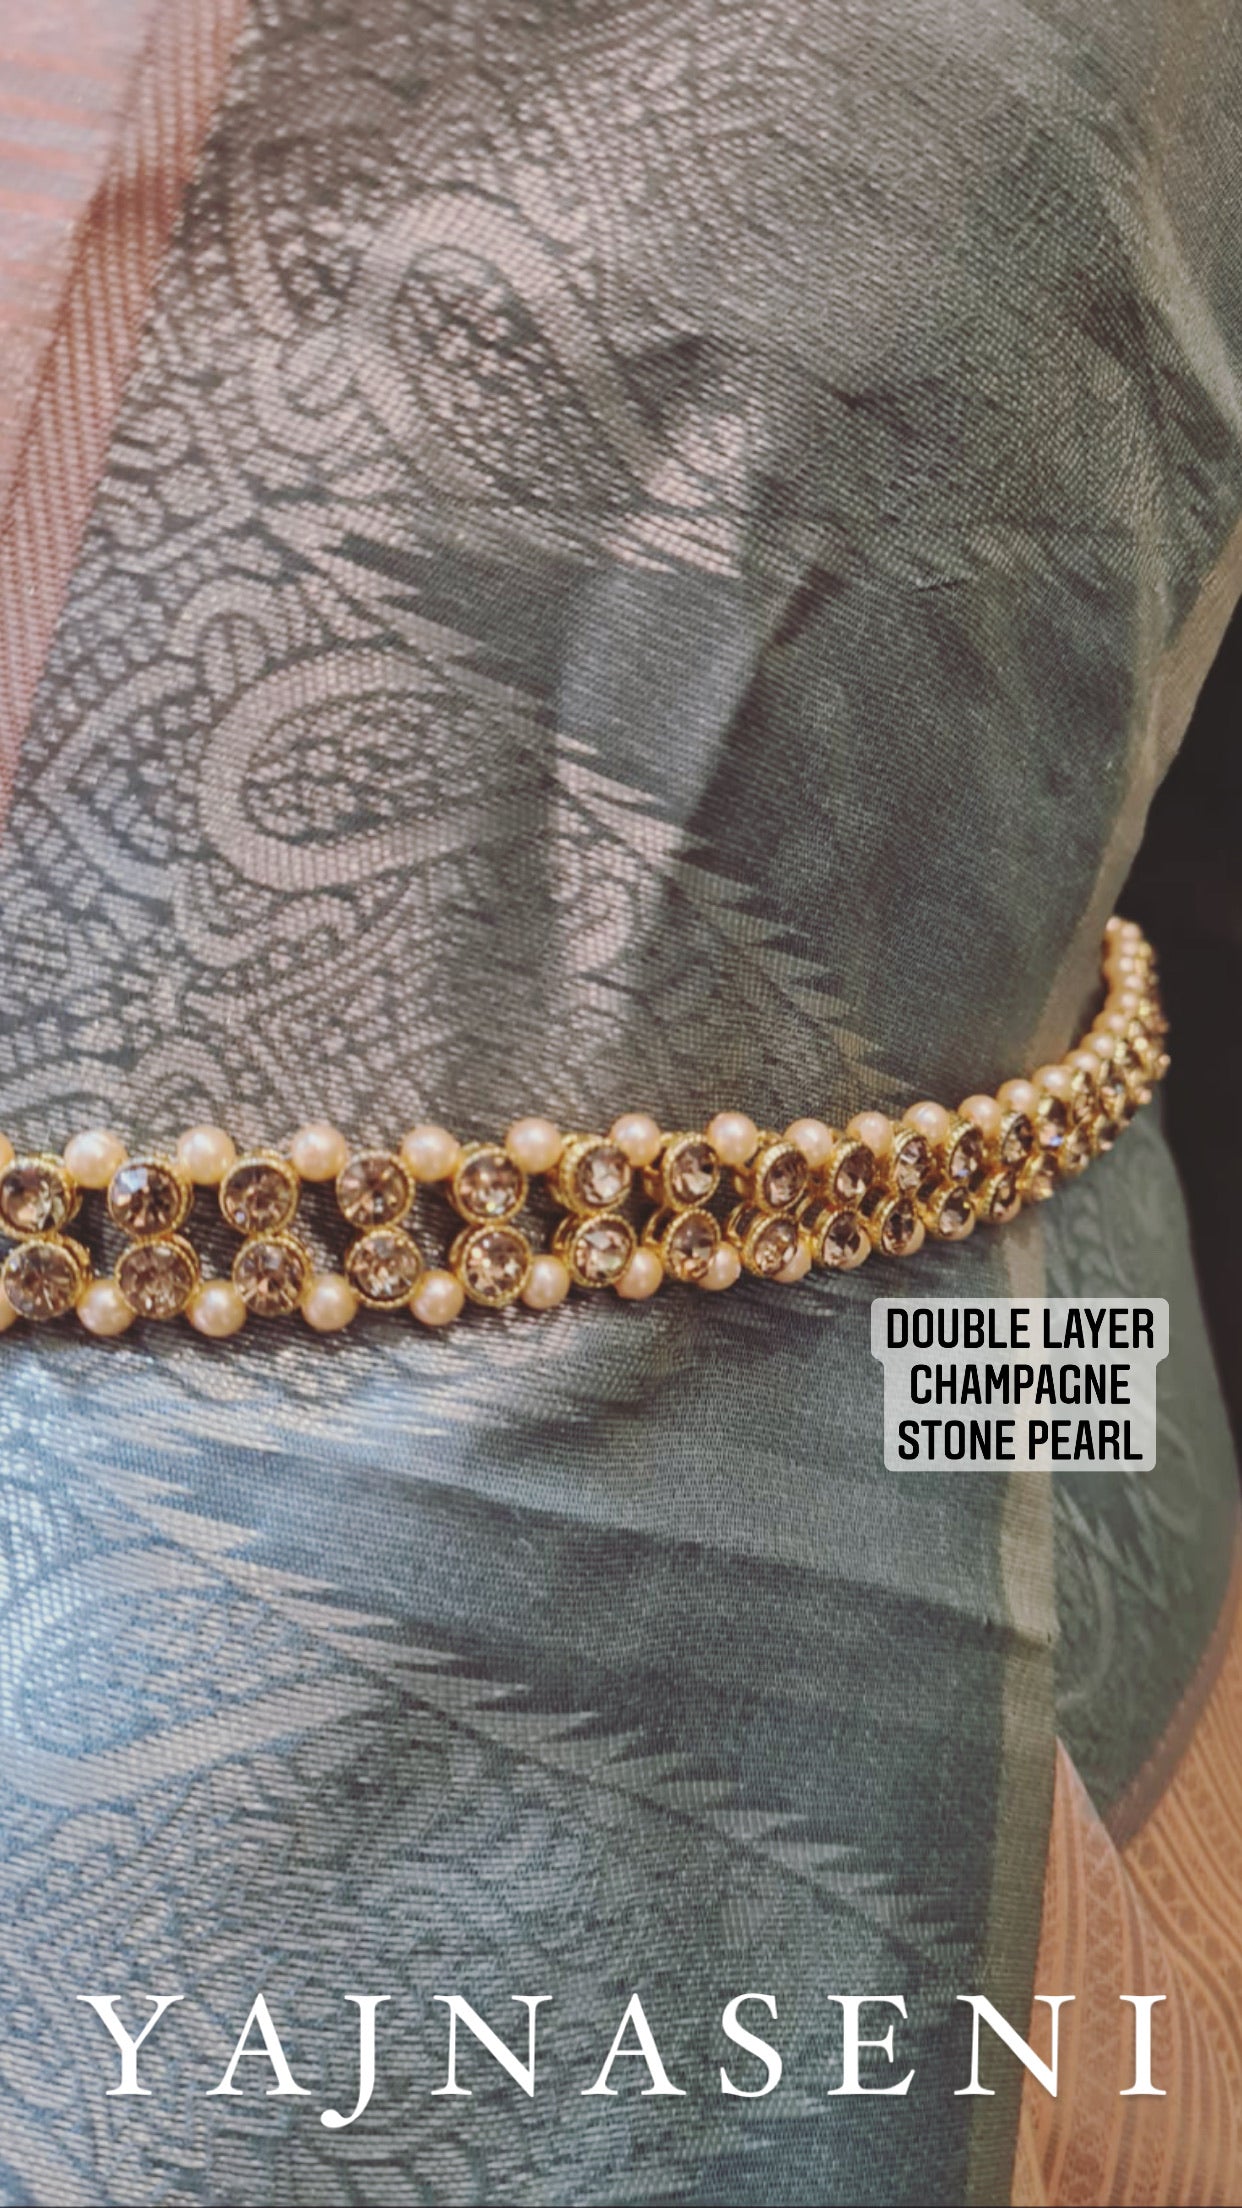 Hipchain - Double layer champagne stone pearl